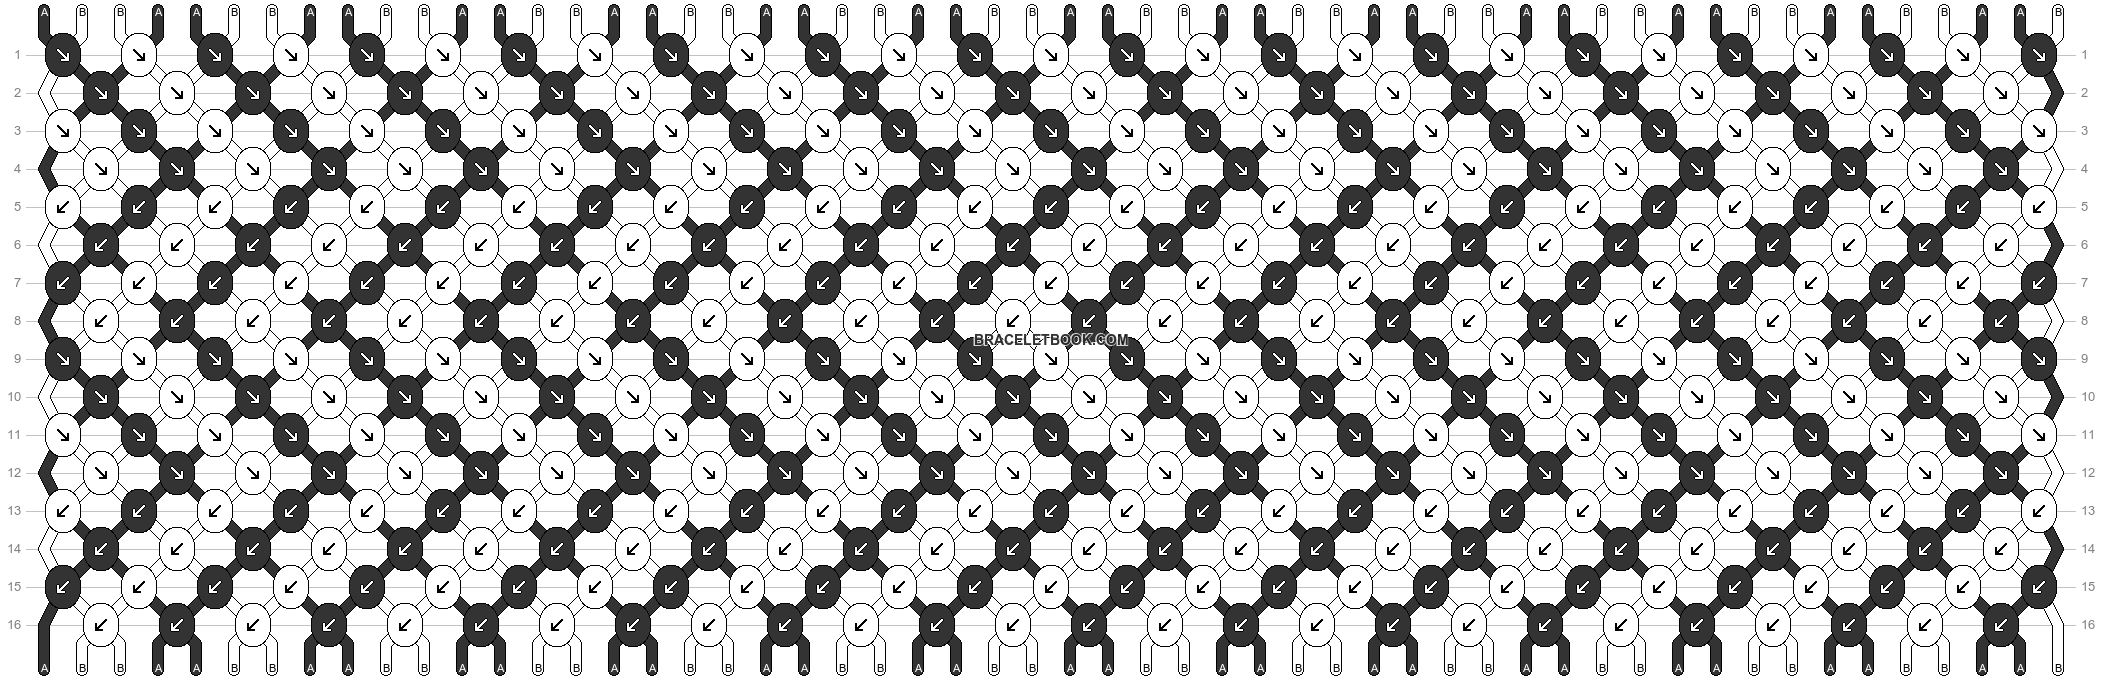 Normal pattern #50352 pattern